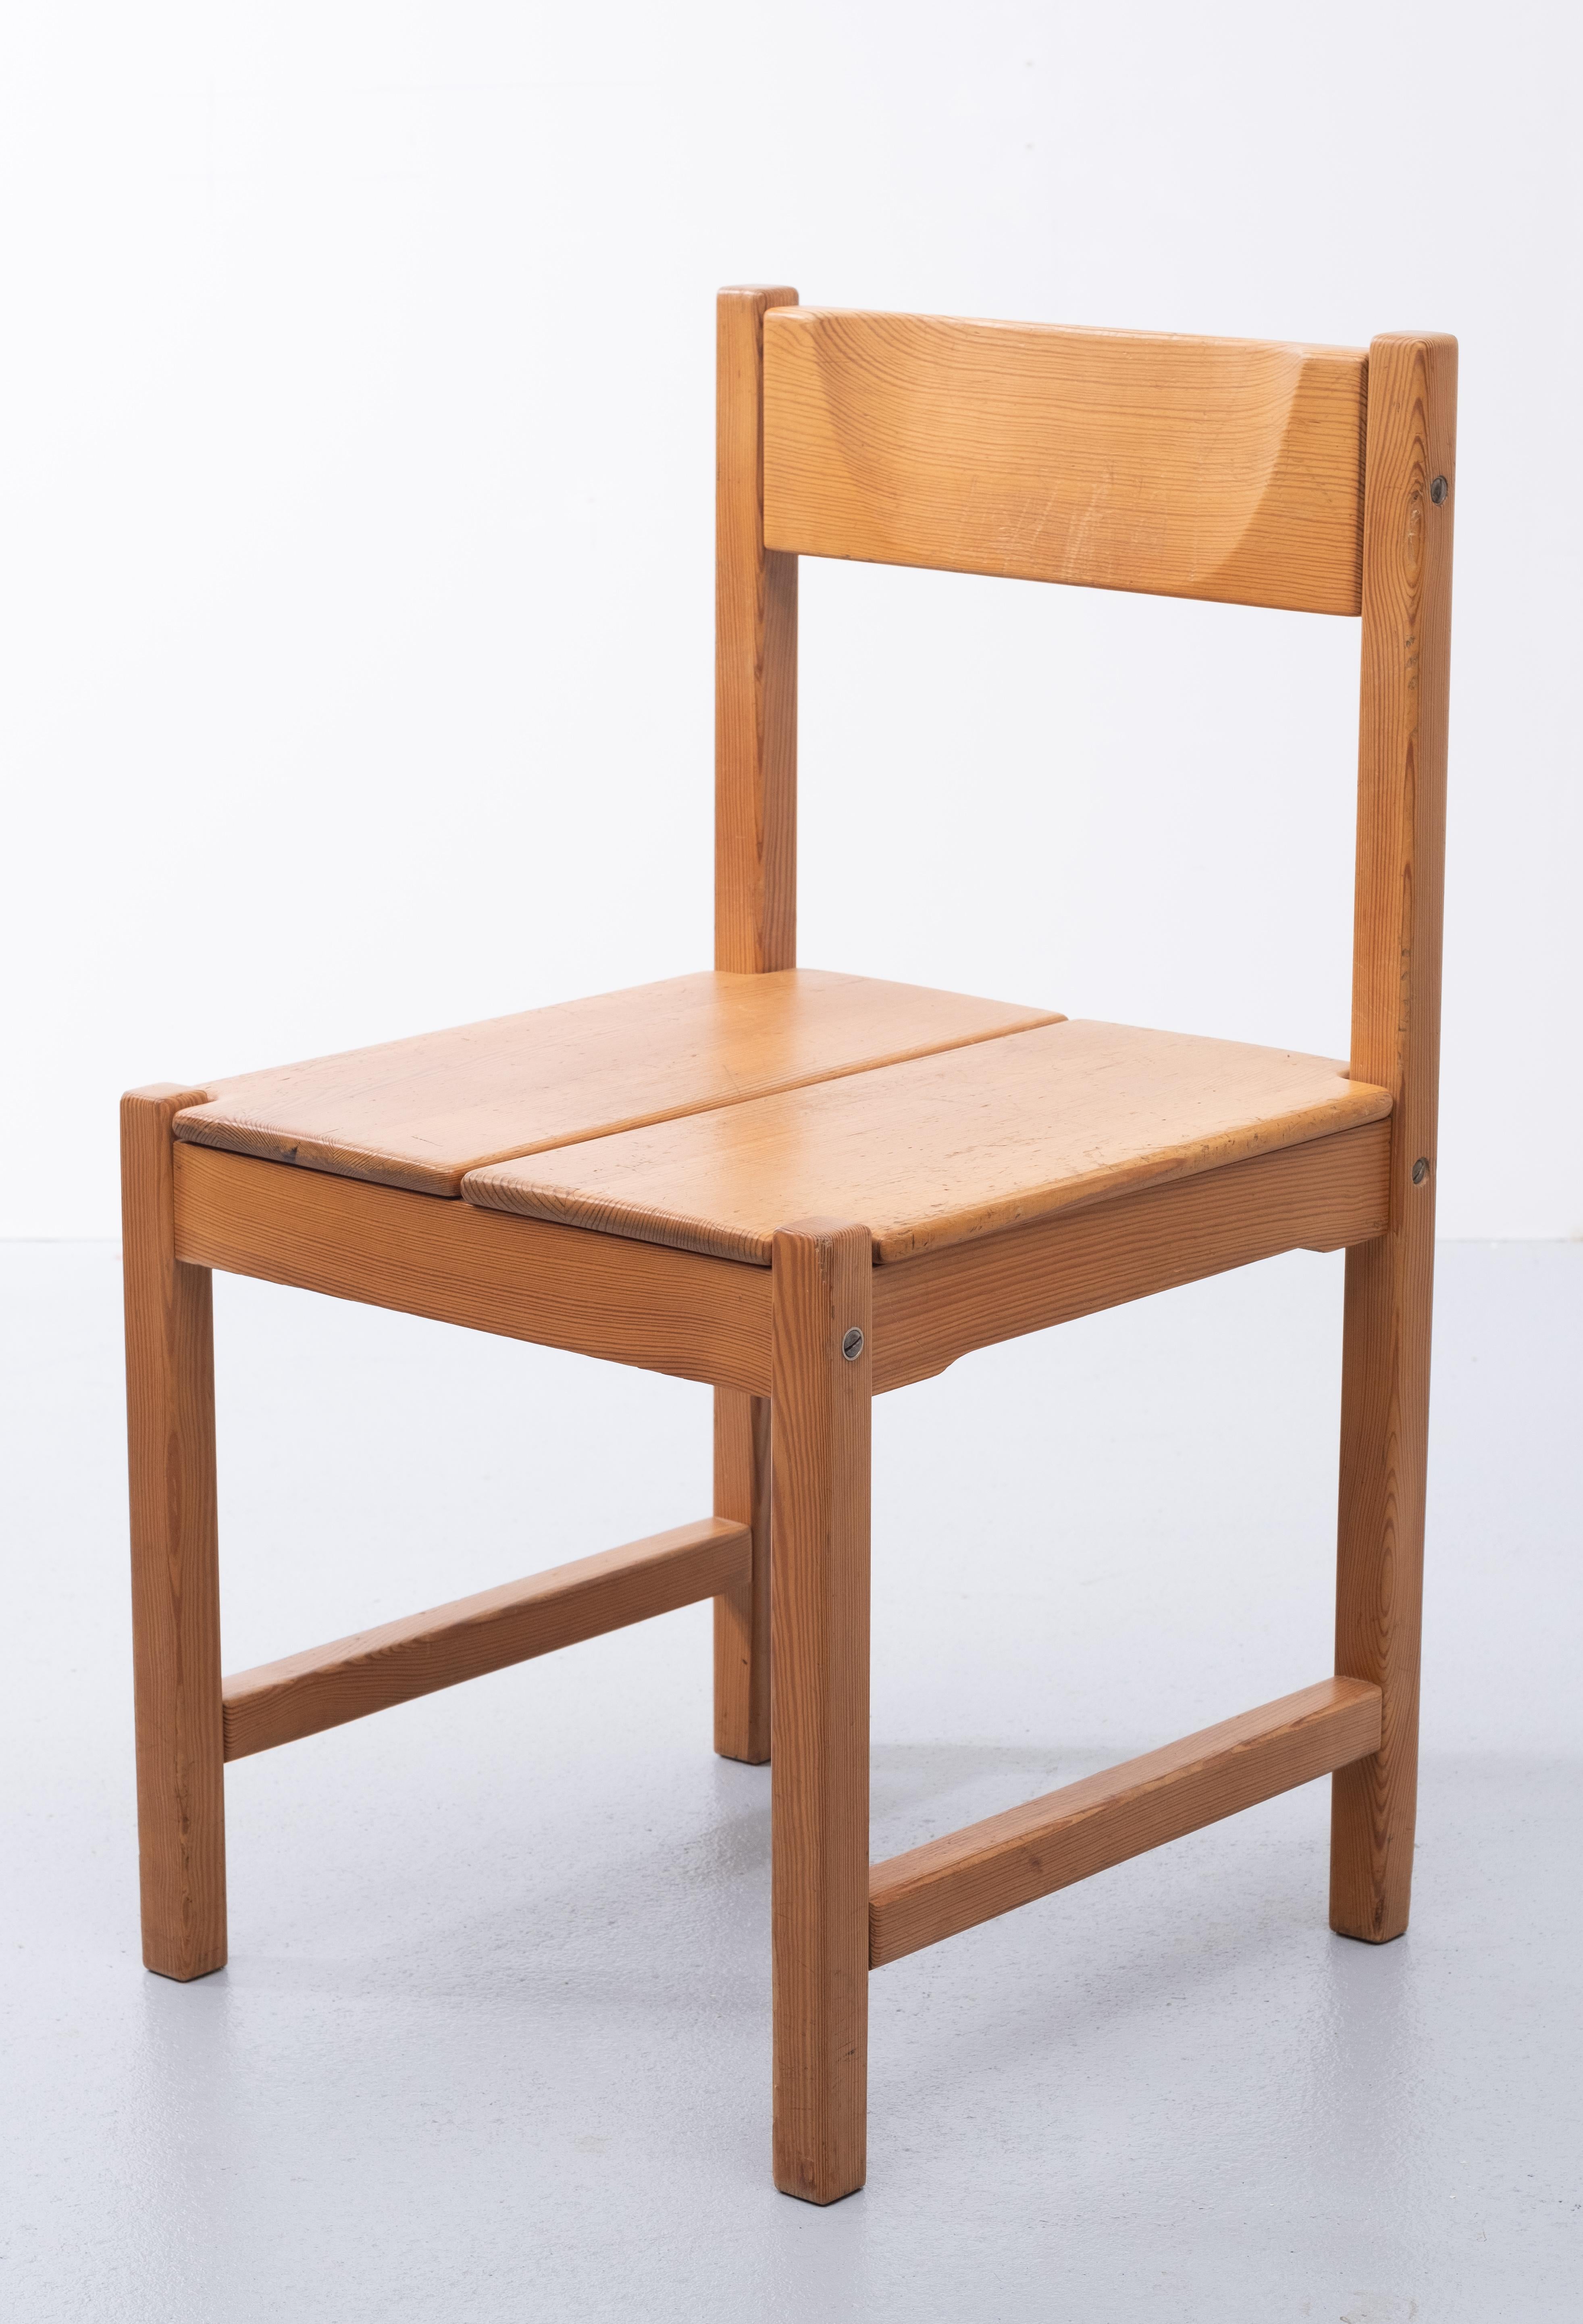 Tapio Wirkkala Pine Dining Chairs, 1960s For Sale 5